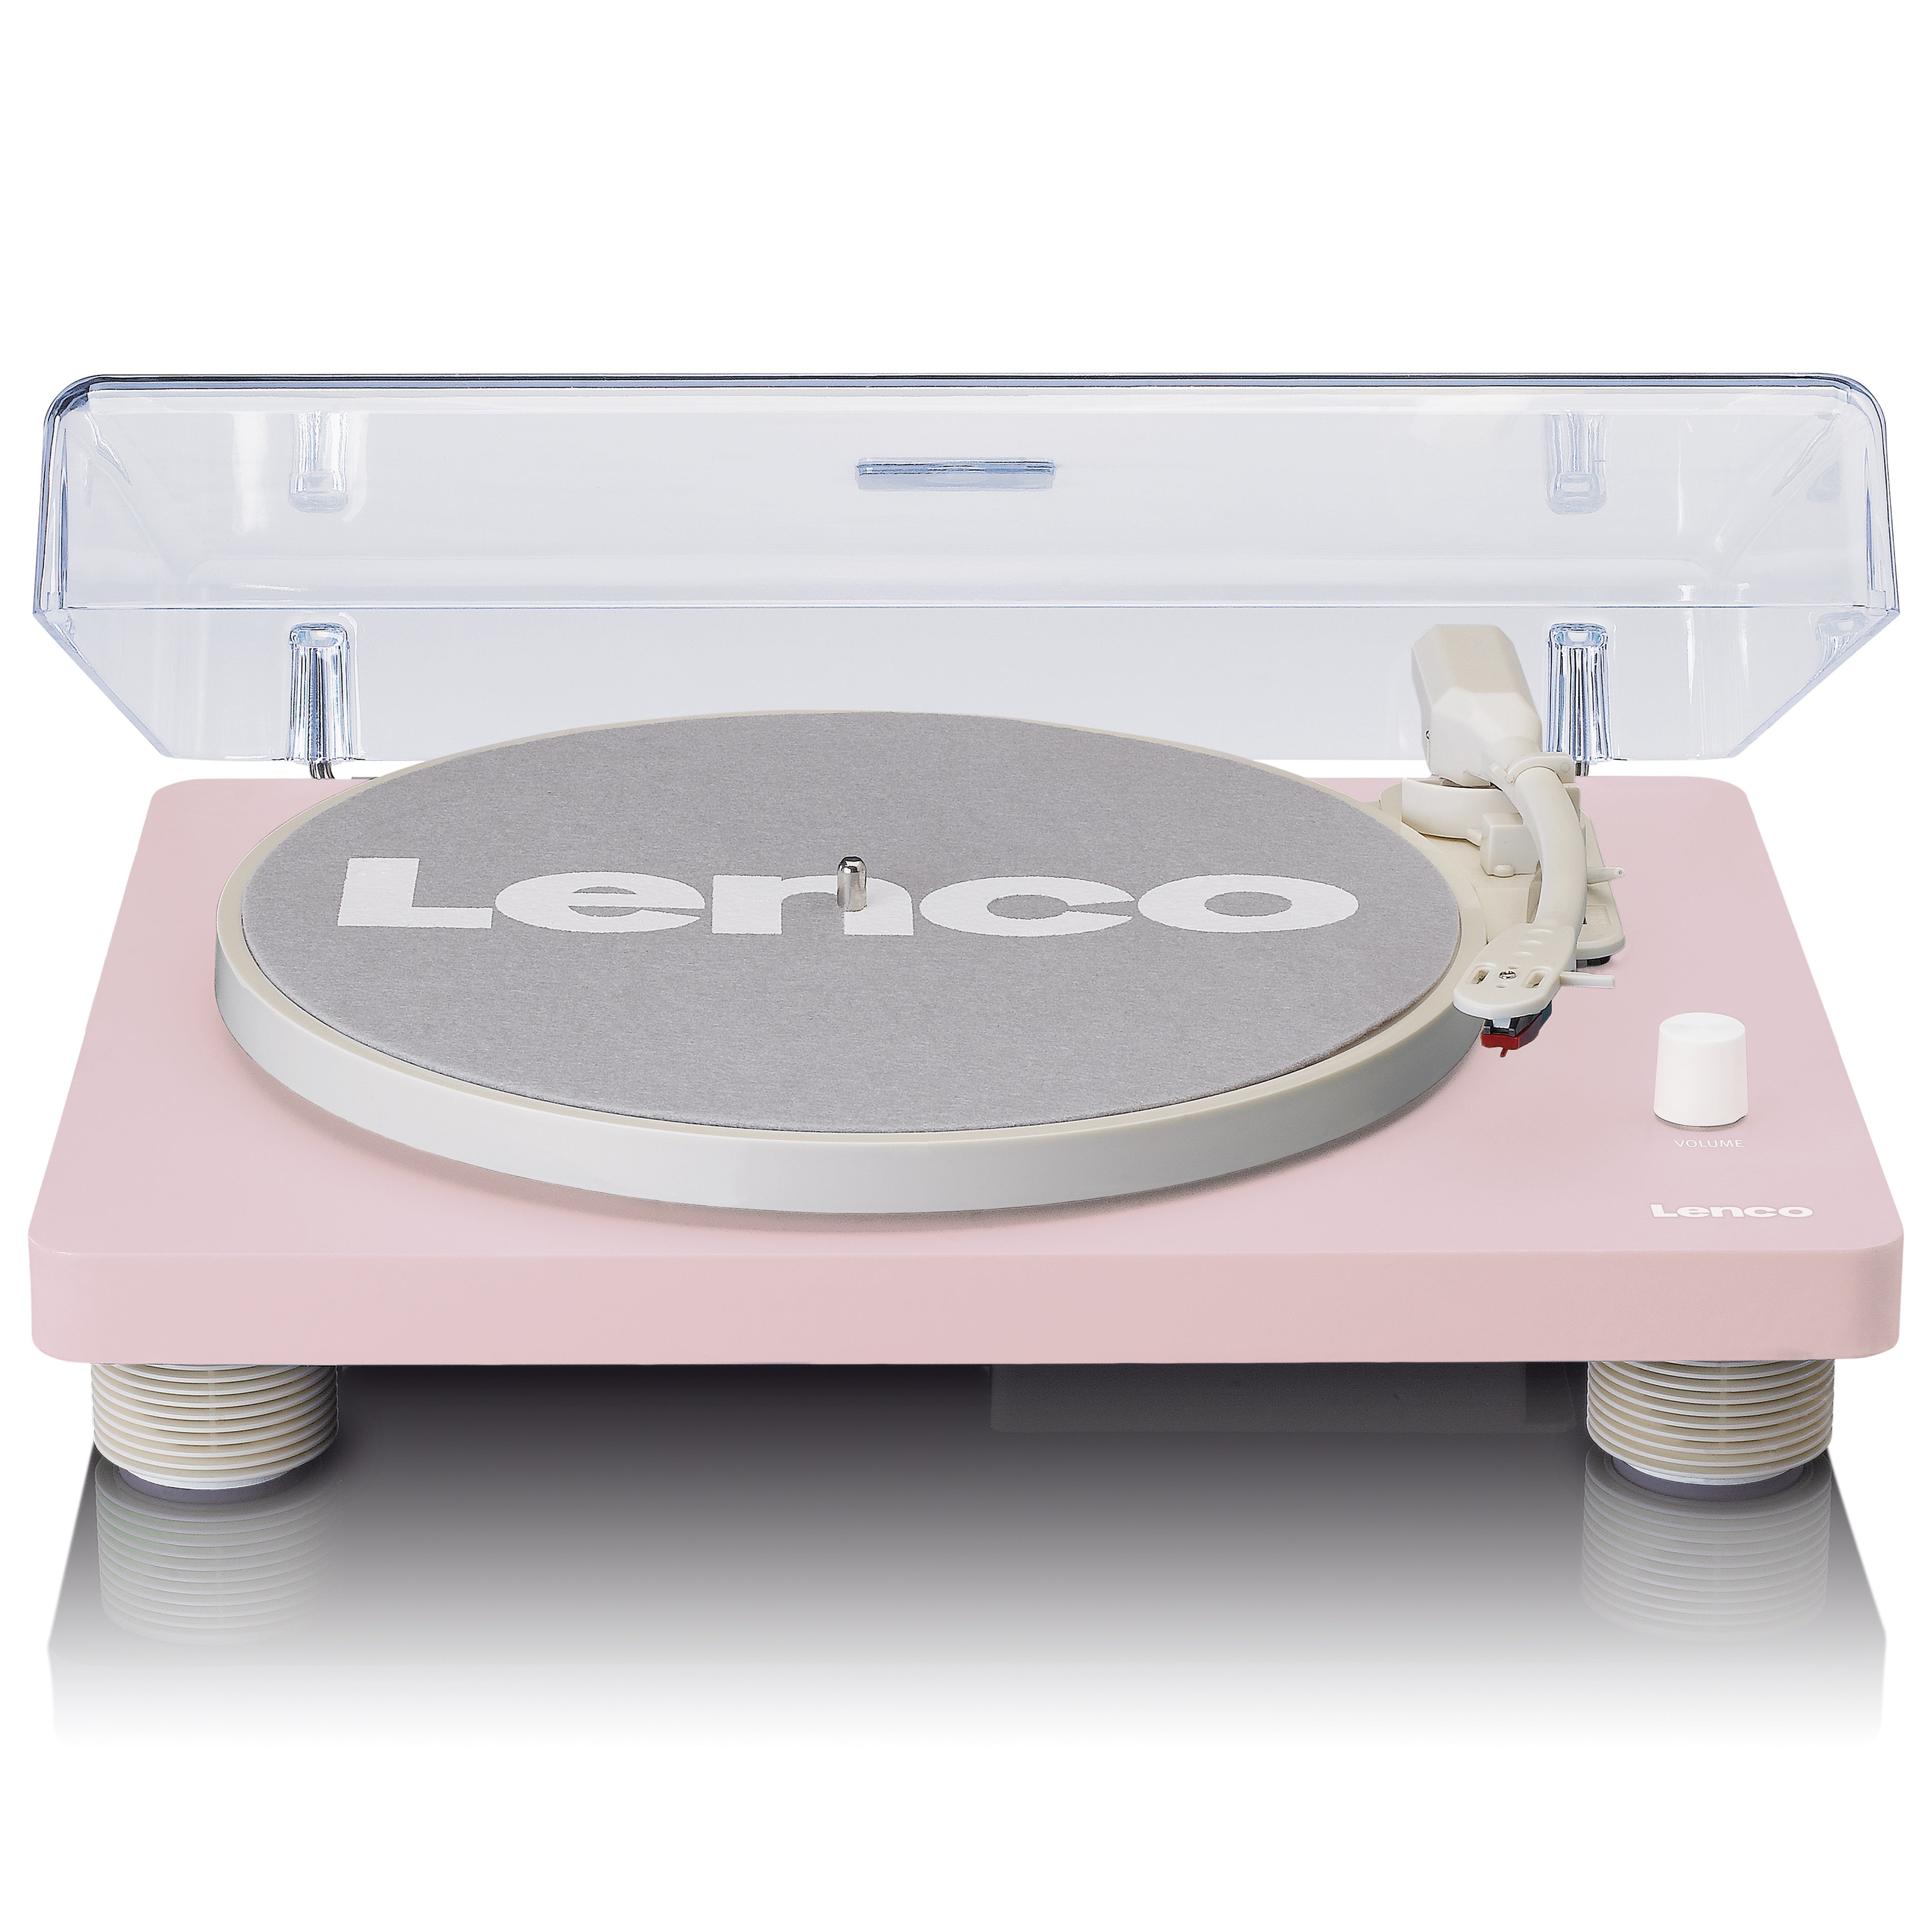 Lenco.de Webshop LS-50PK - Webshop Jetzt Lenco – offiziellen im Lenco kaufen? Offizieller |